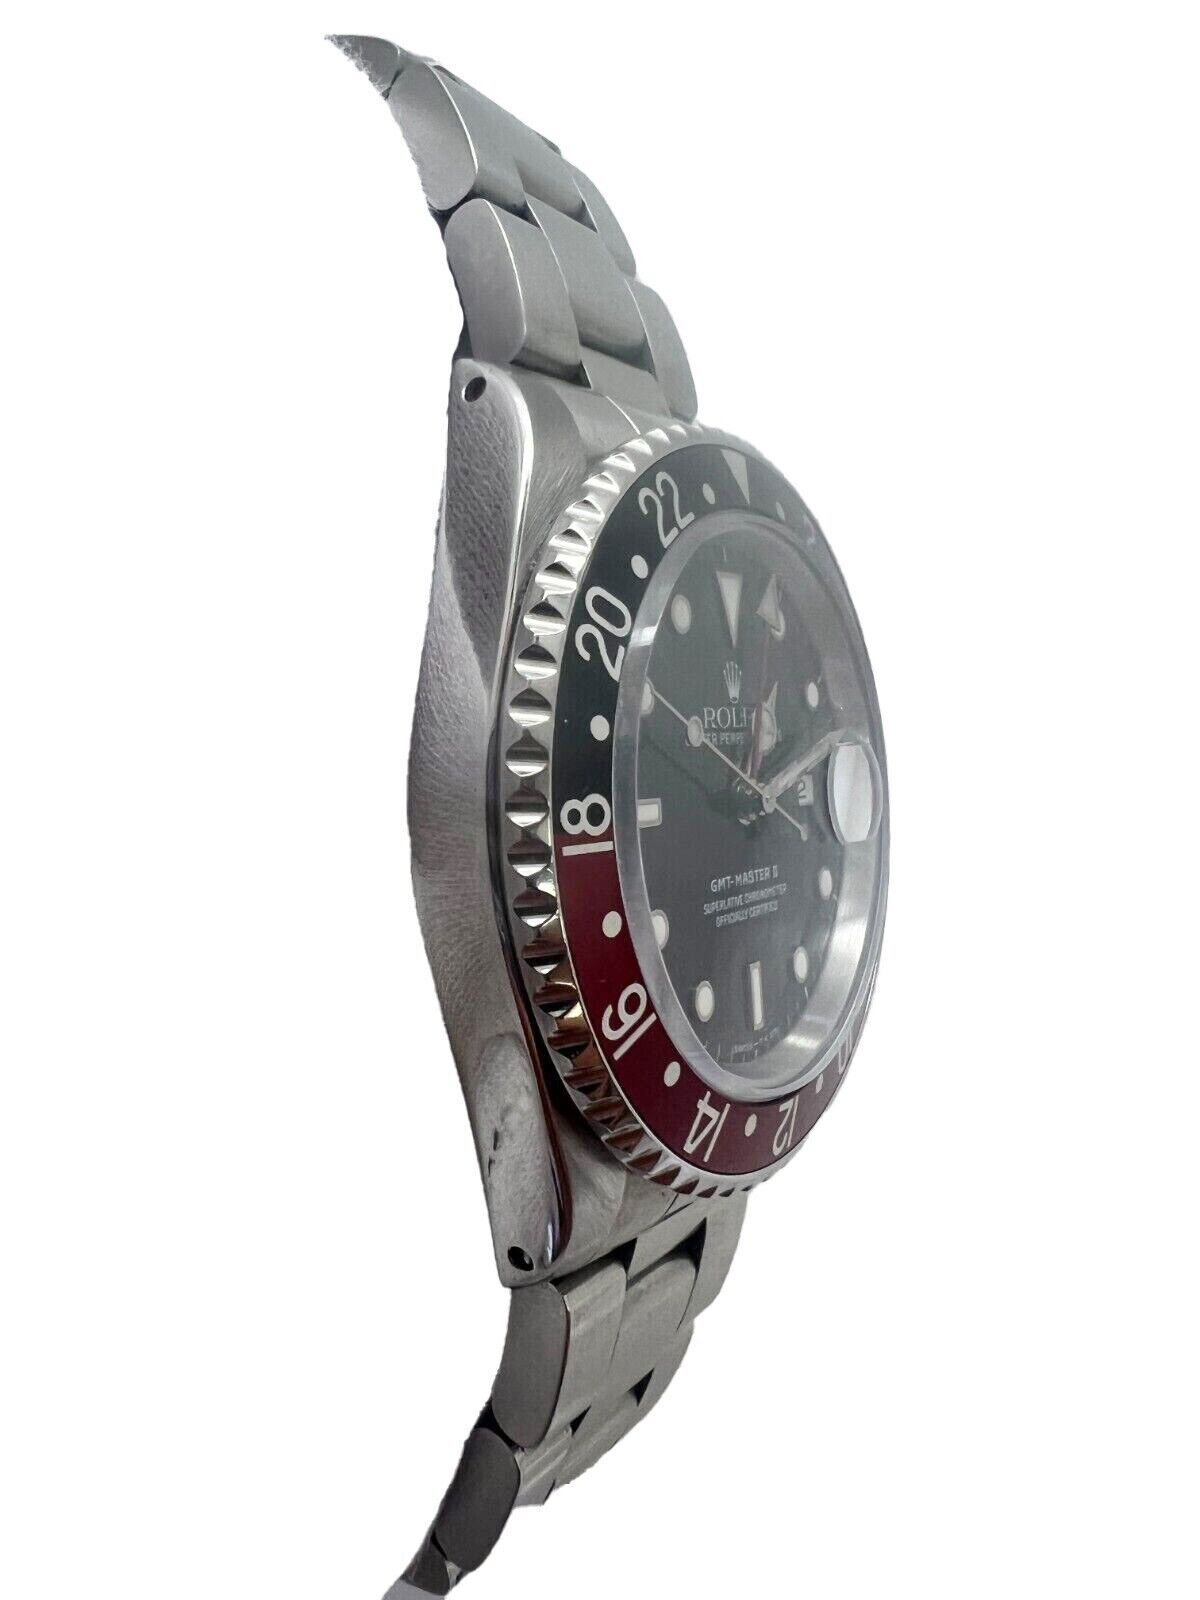 Rolex GMT-Master II Ref 16710 Red & Black Coke Men's Watch